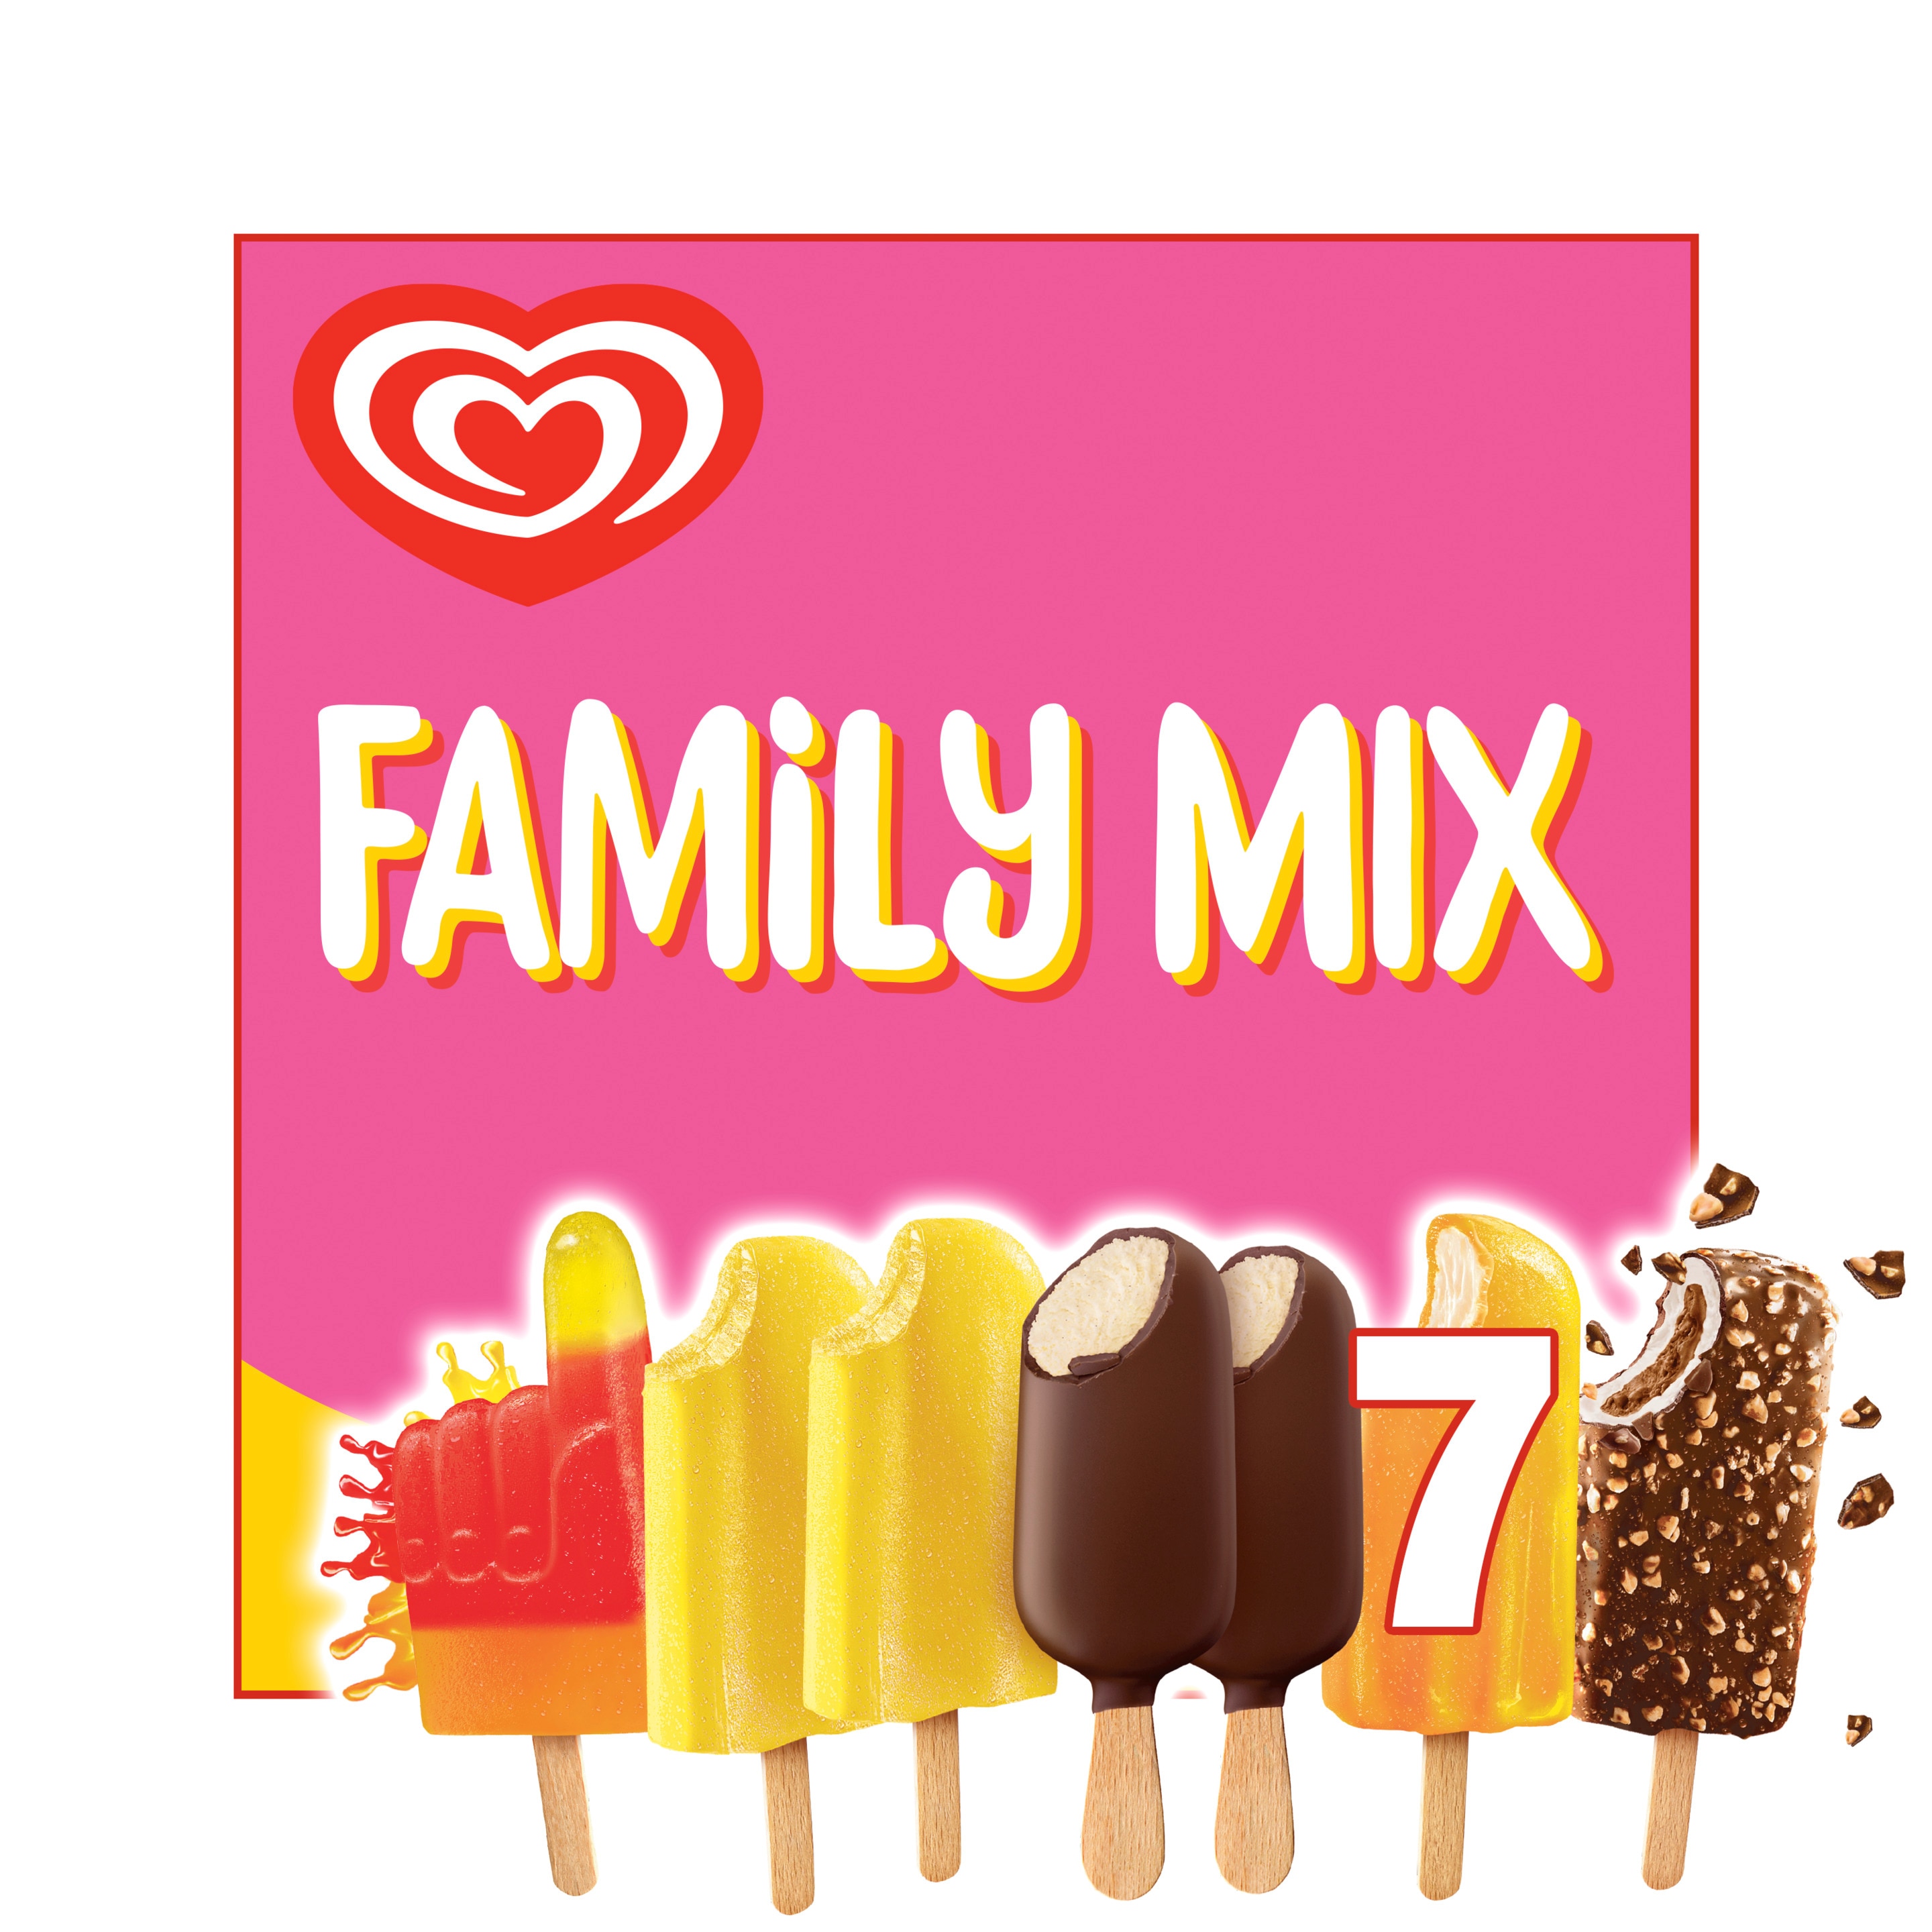 Langnese Family Mix 462ml - Langnese Deutschland